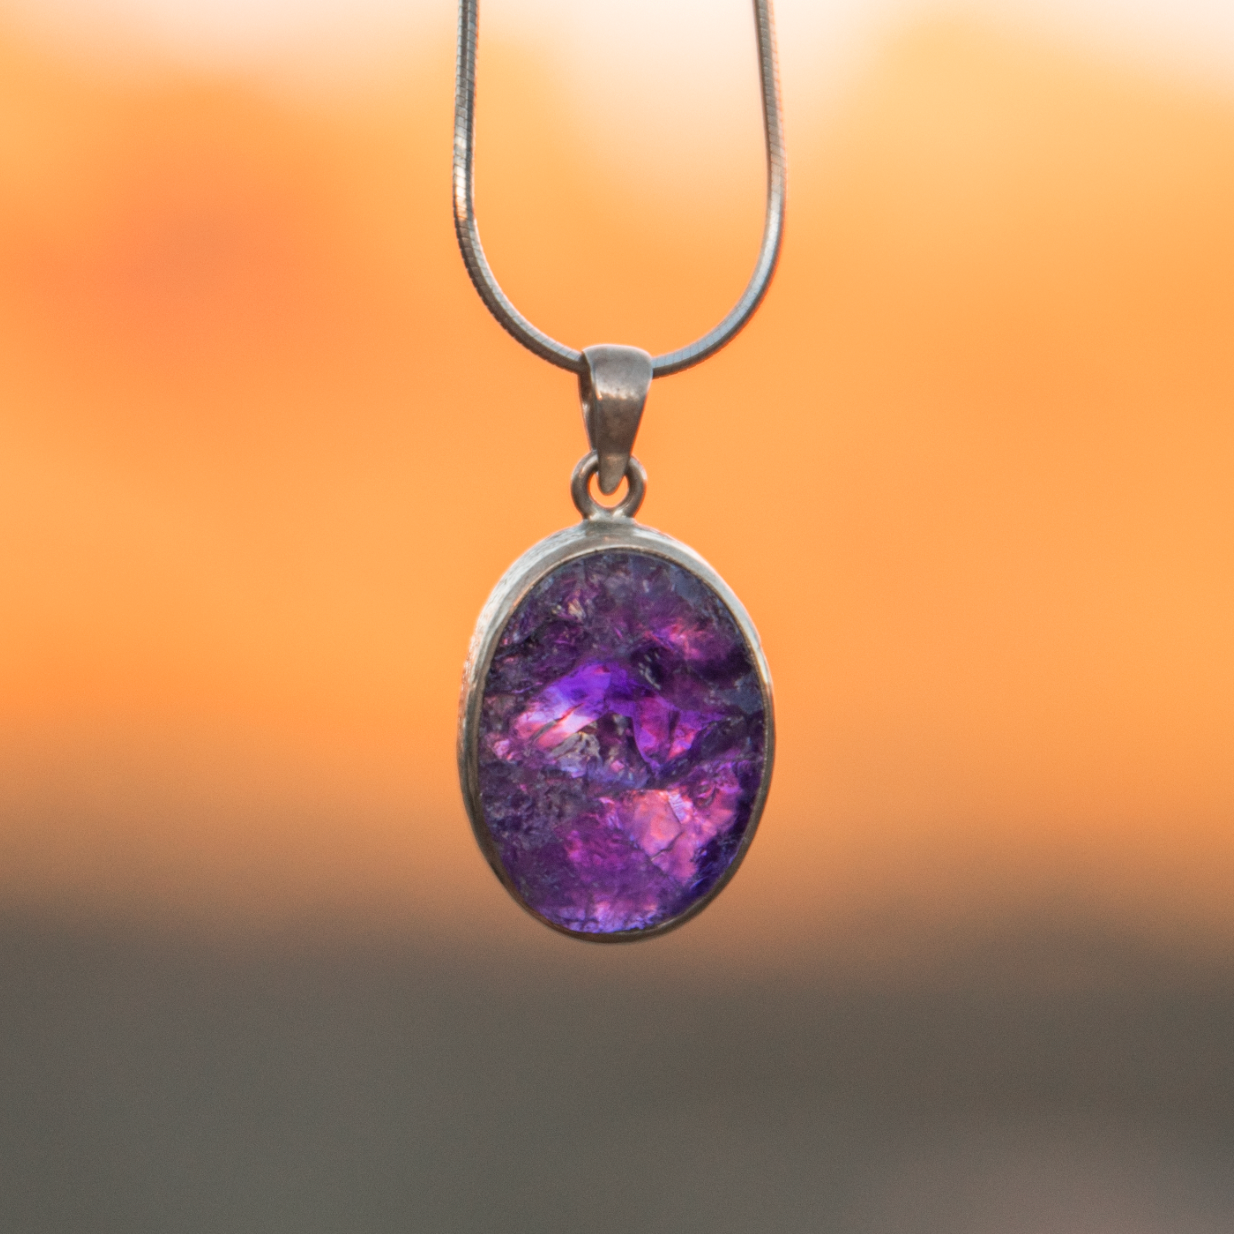 crystal jewelry: amethyst pendant in sedona, arizona used for energy healing